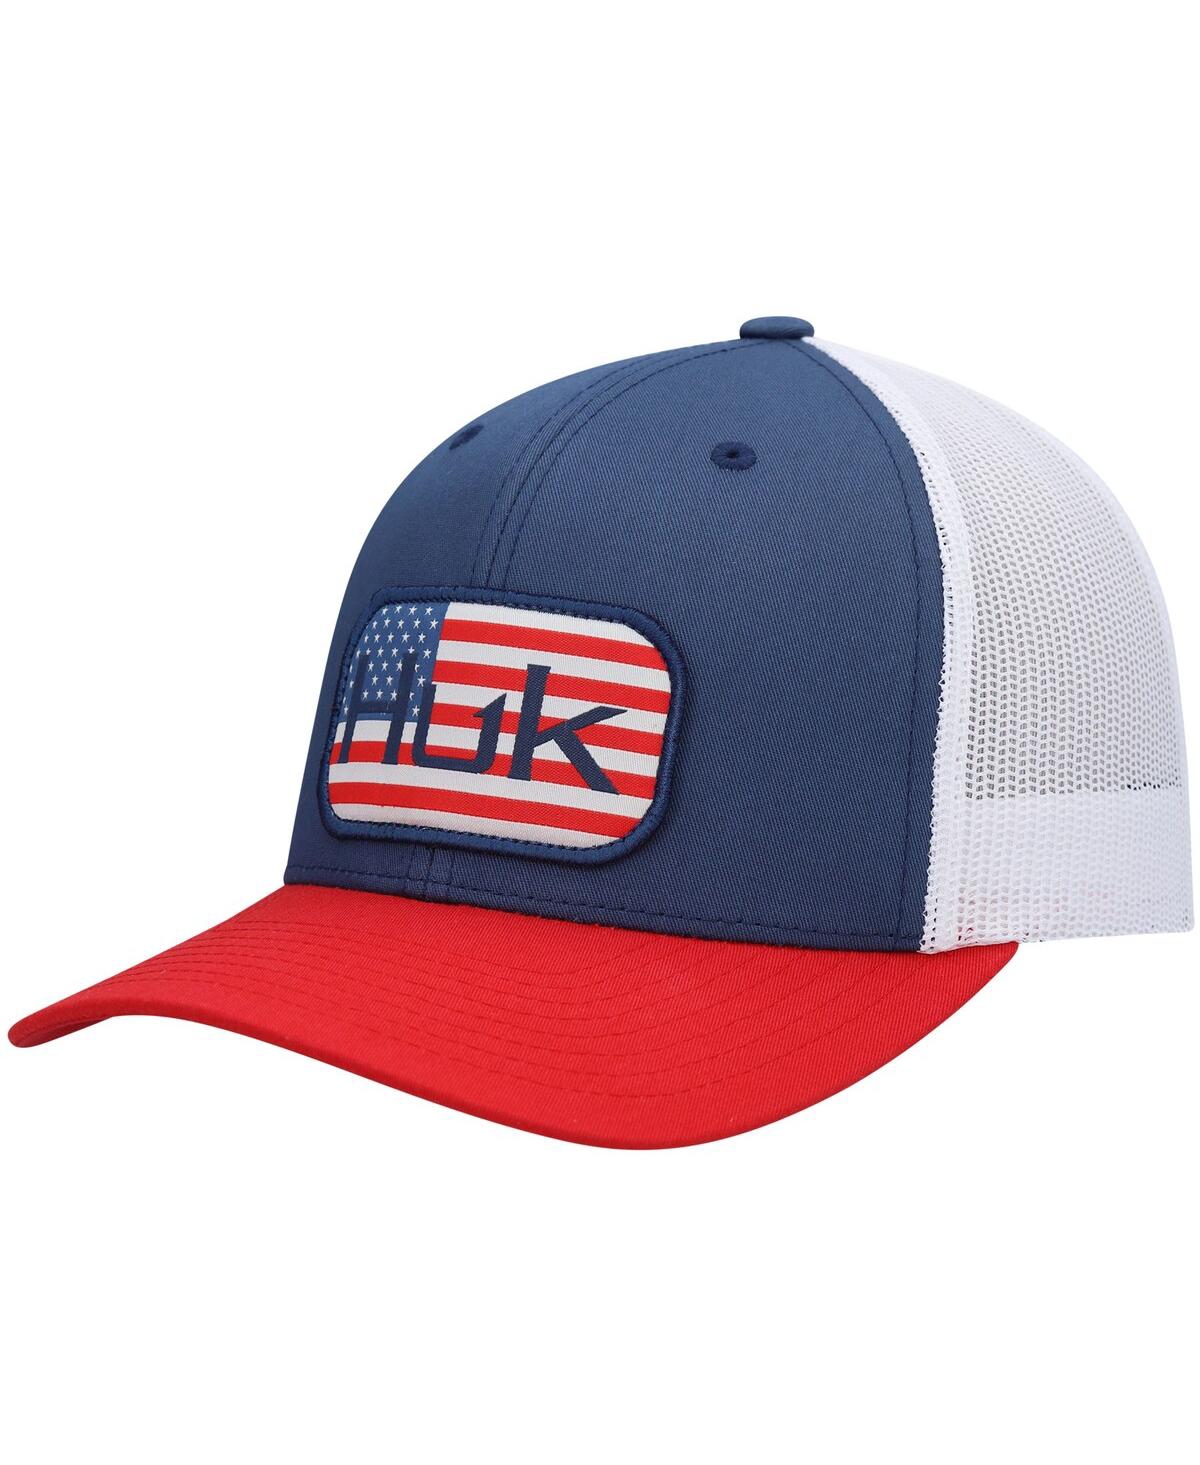 Huk Men's  Blue Americana Color Block Trucker Snapback Hat